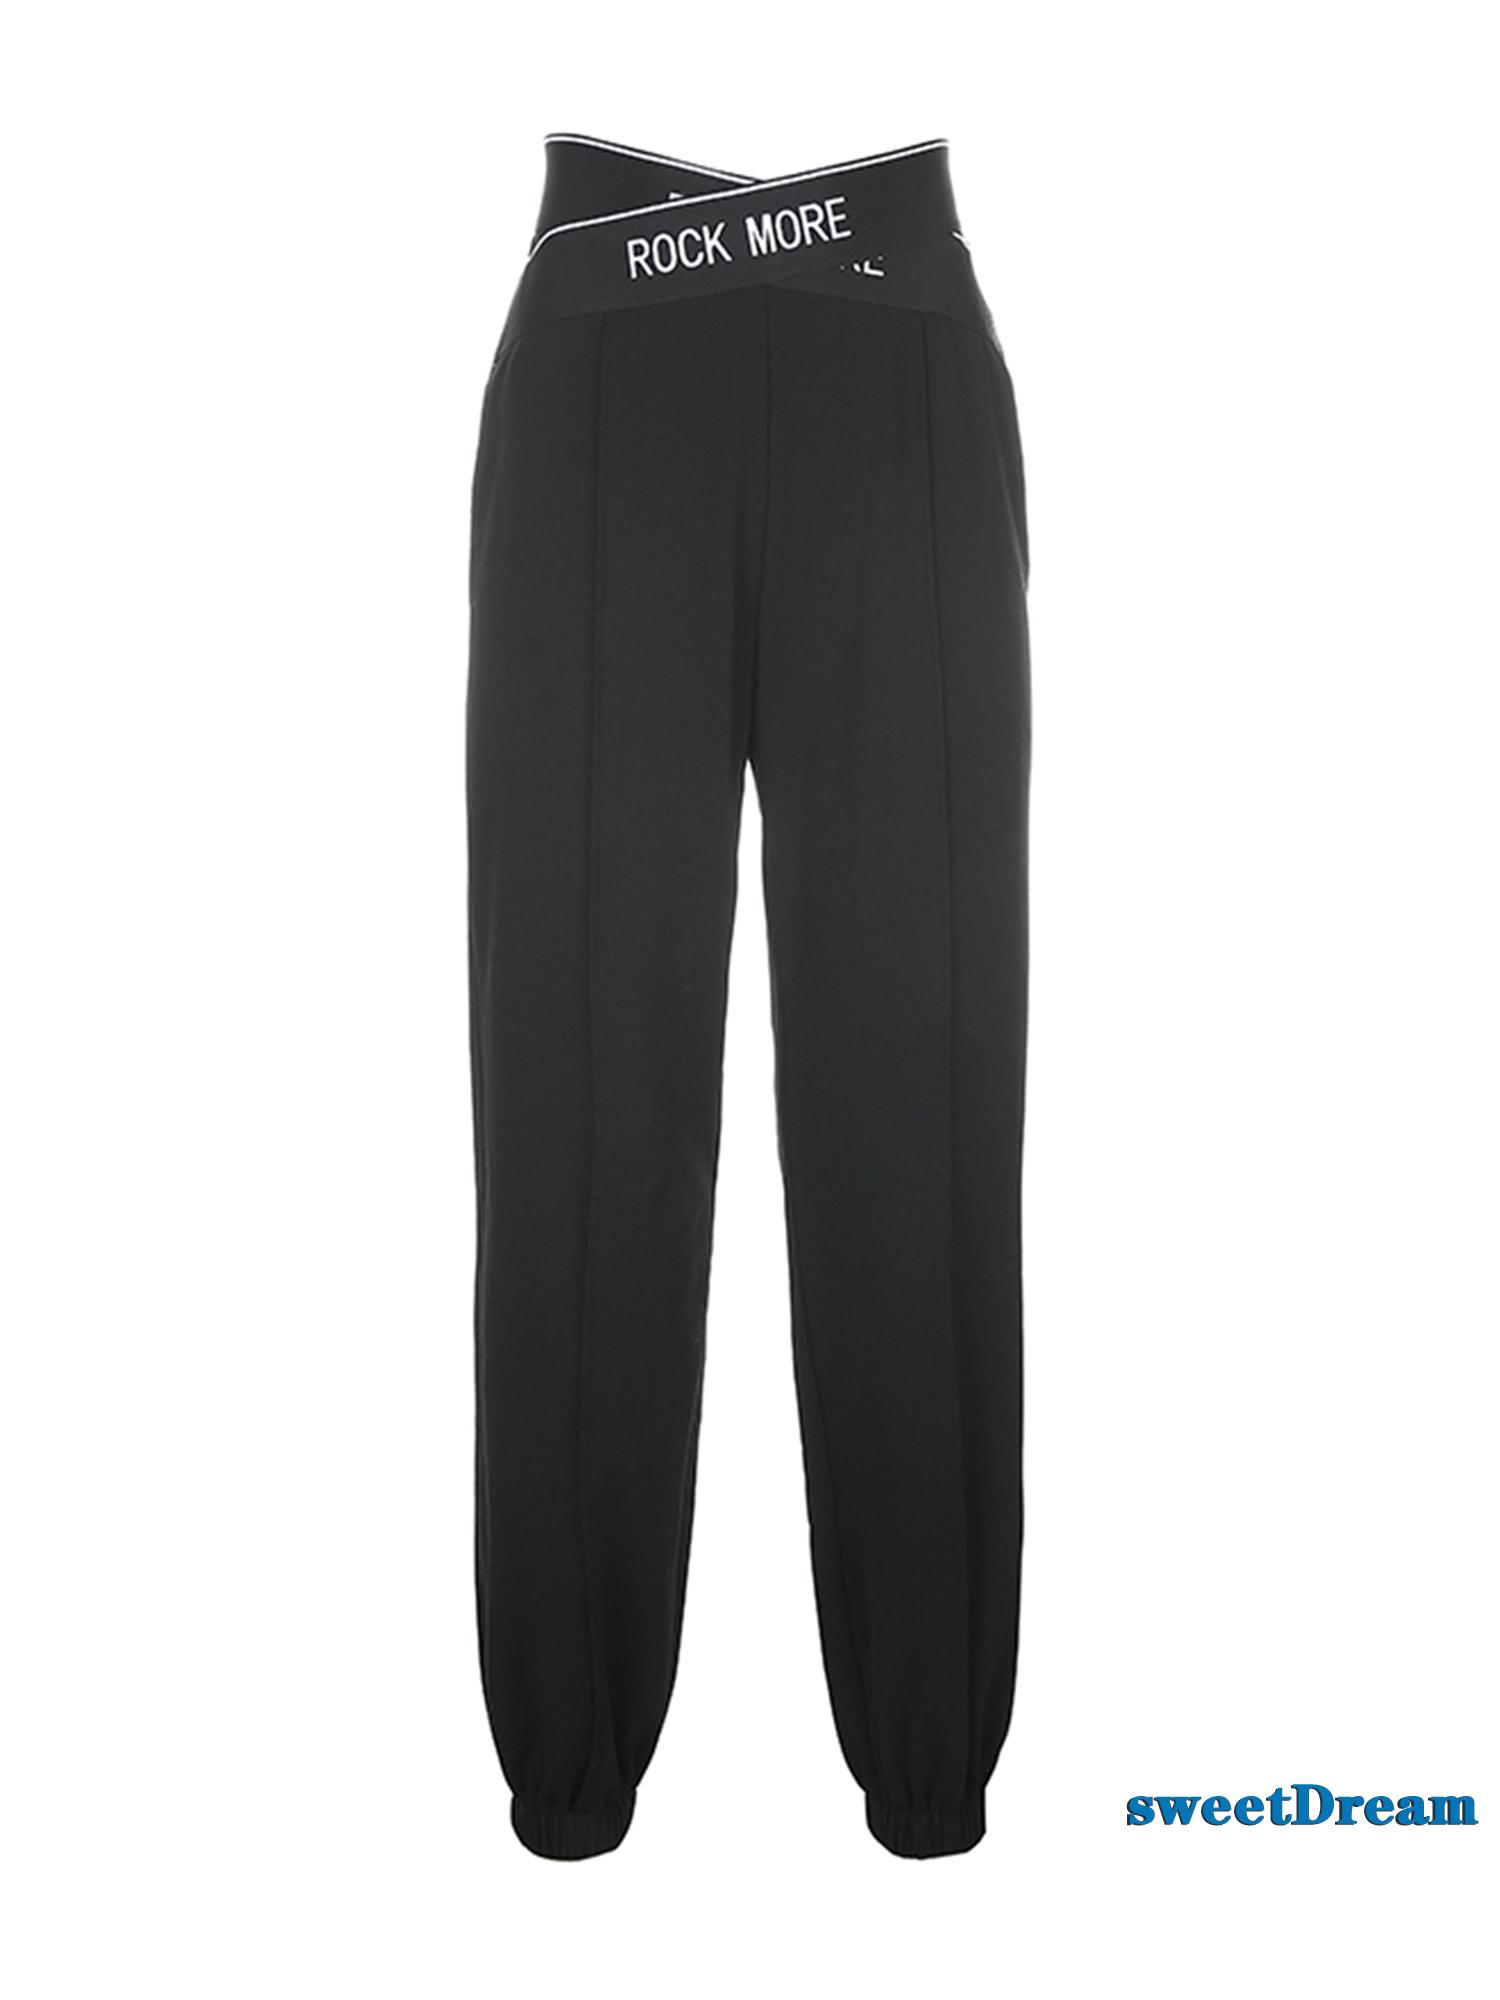 SWEETDREAM-Women´s Casual Jogger Pants, Criss Cross Letter Print Loose Fit Full Length Sweatpants